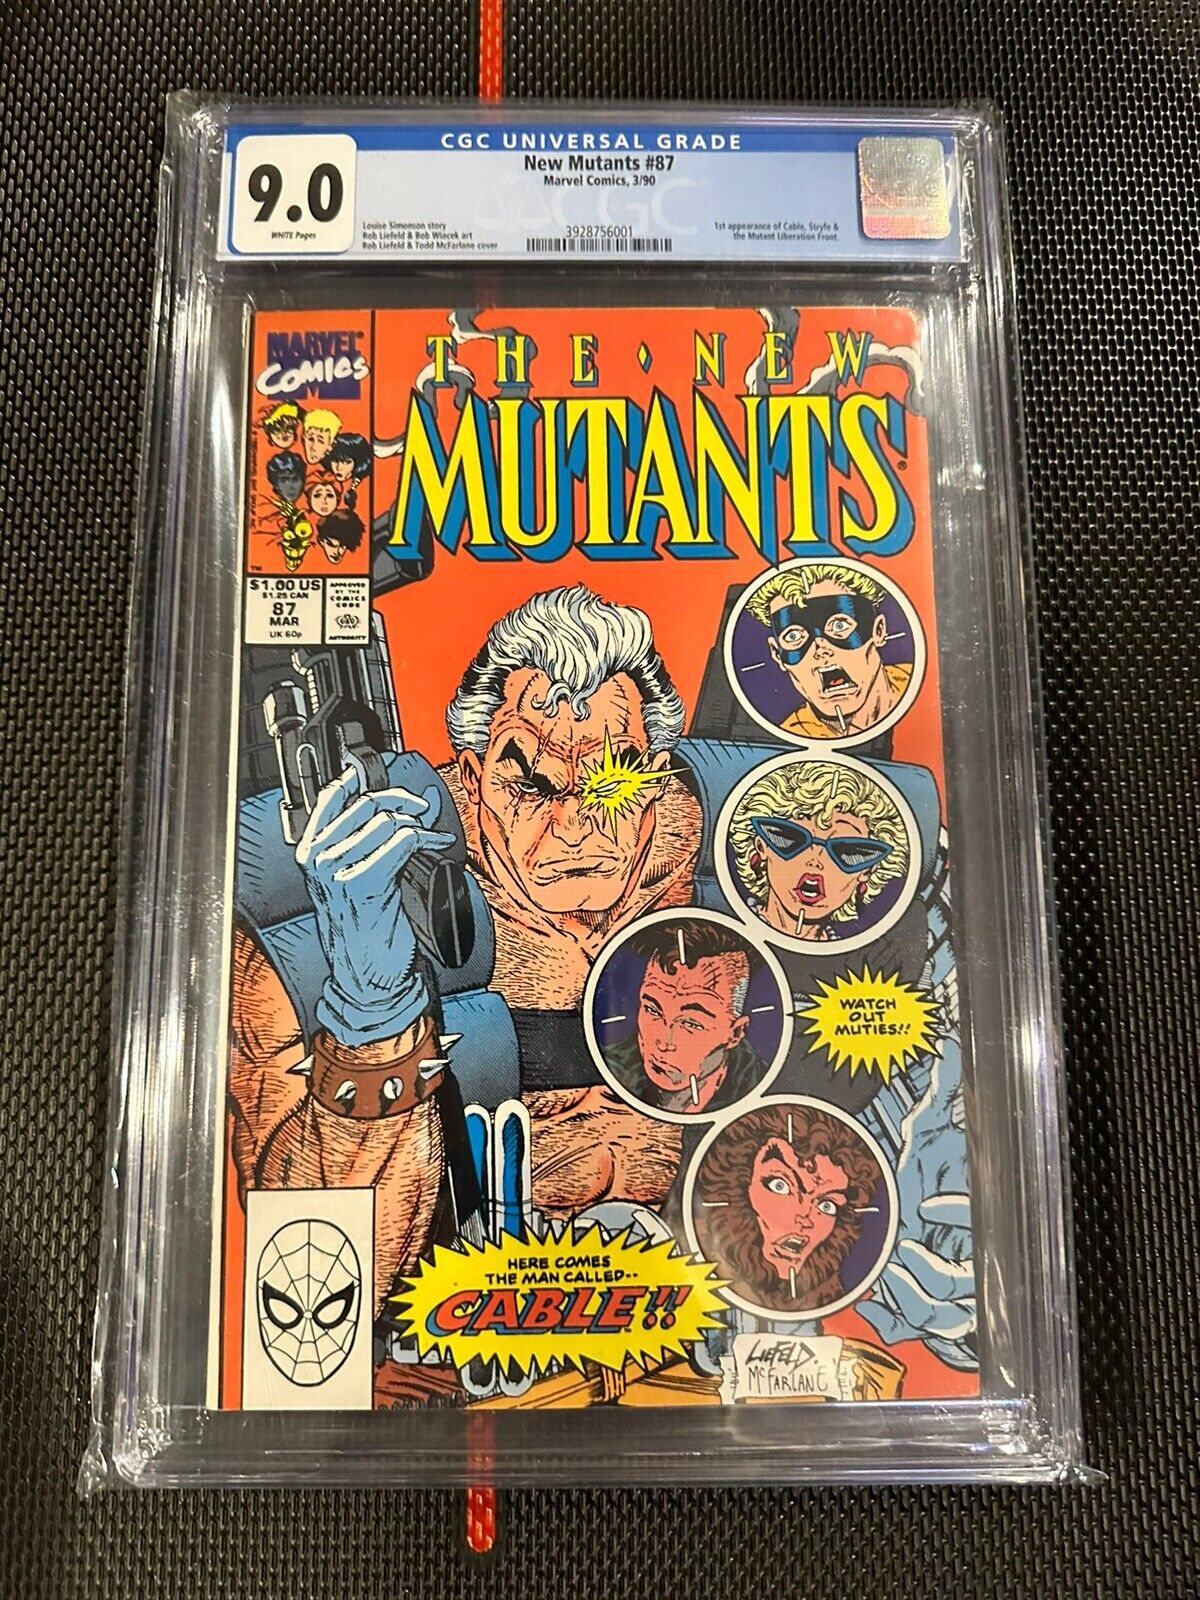 The New Mutants #87 (Marvel Comics March 1990) CGC